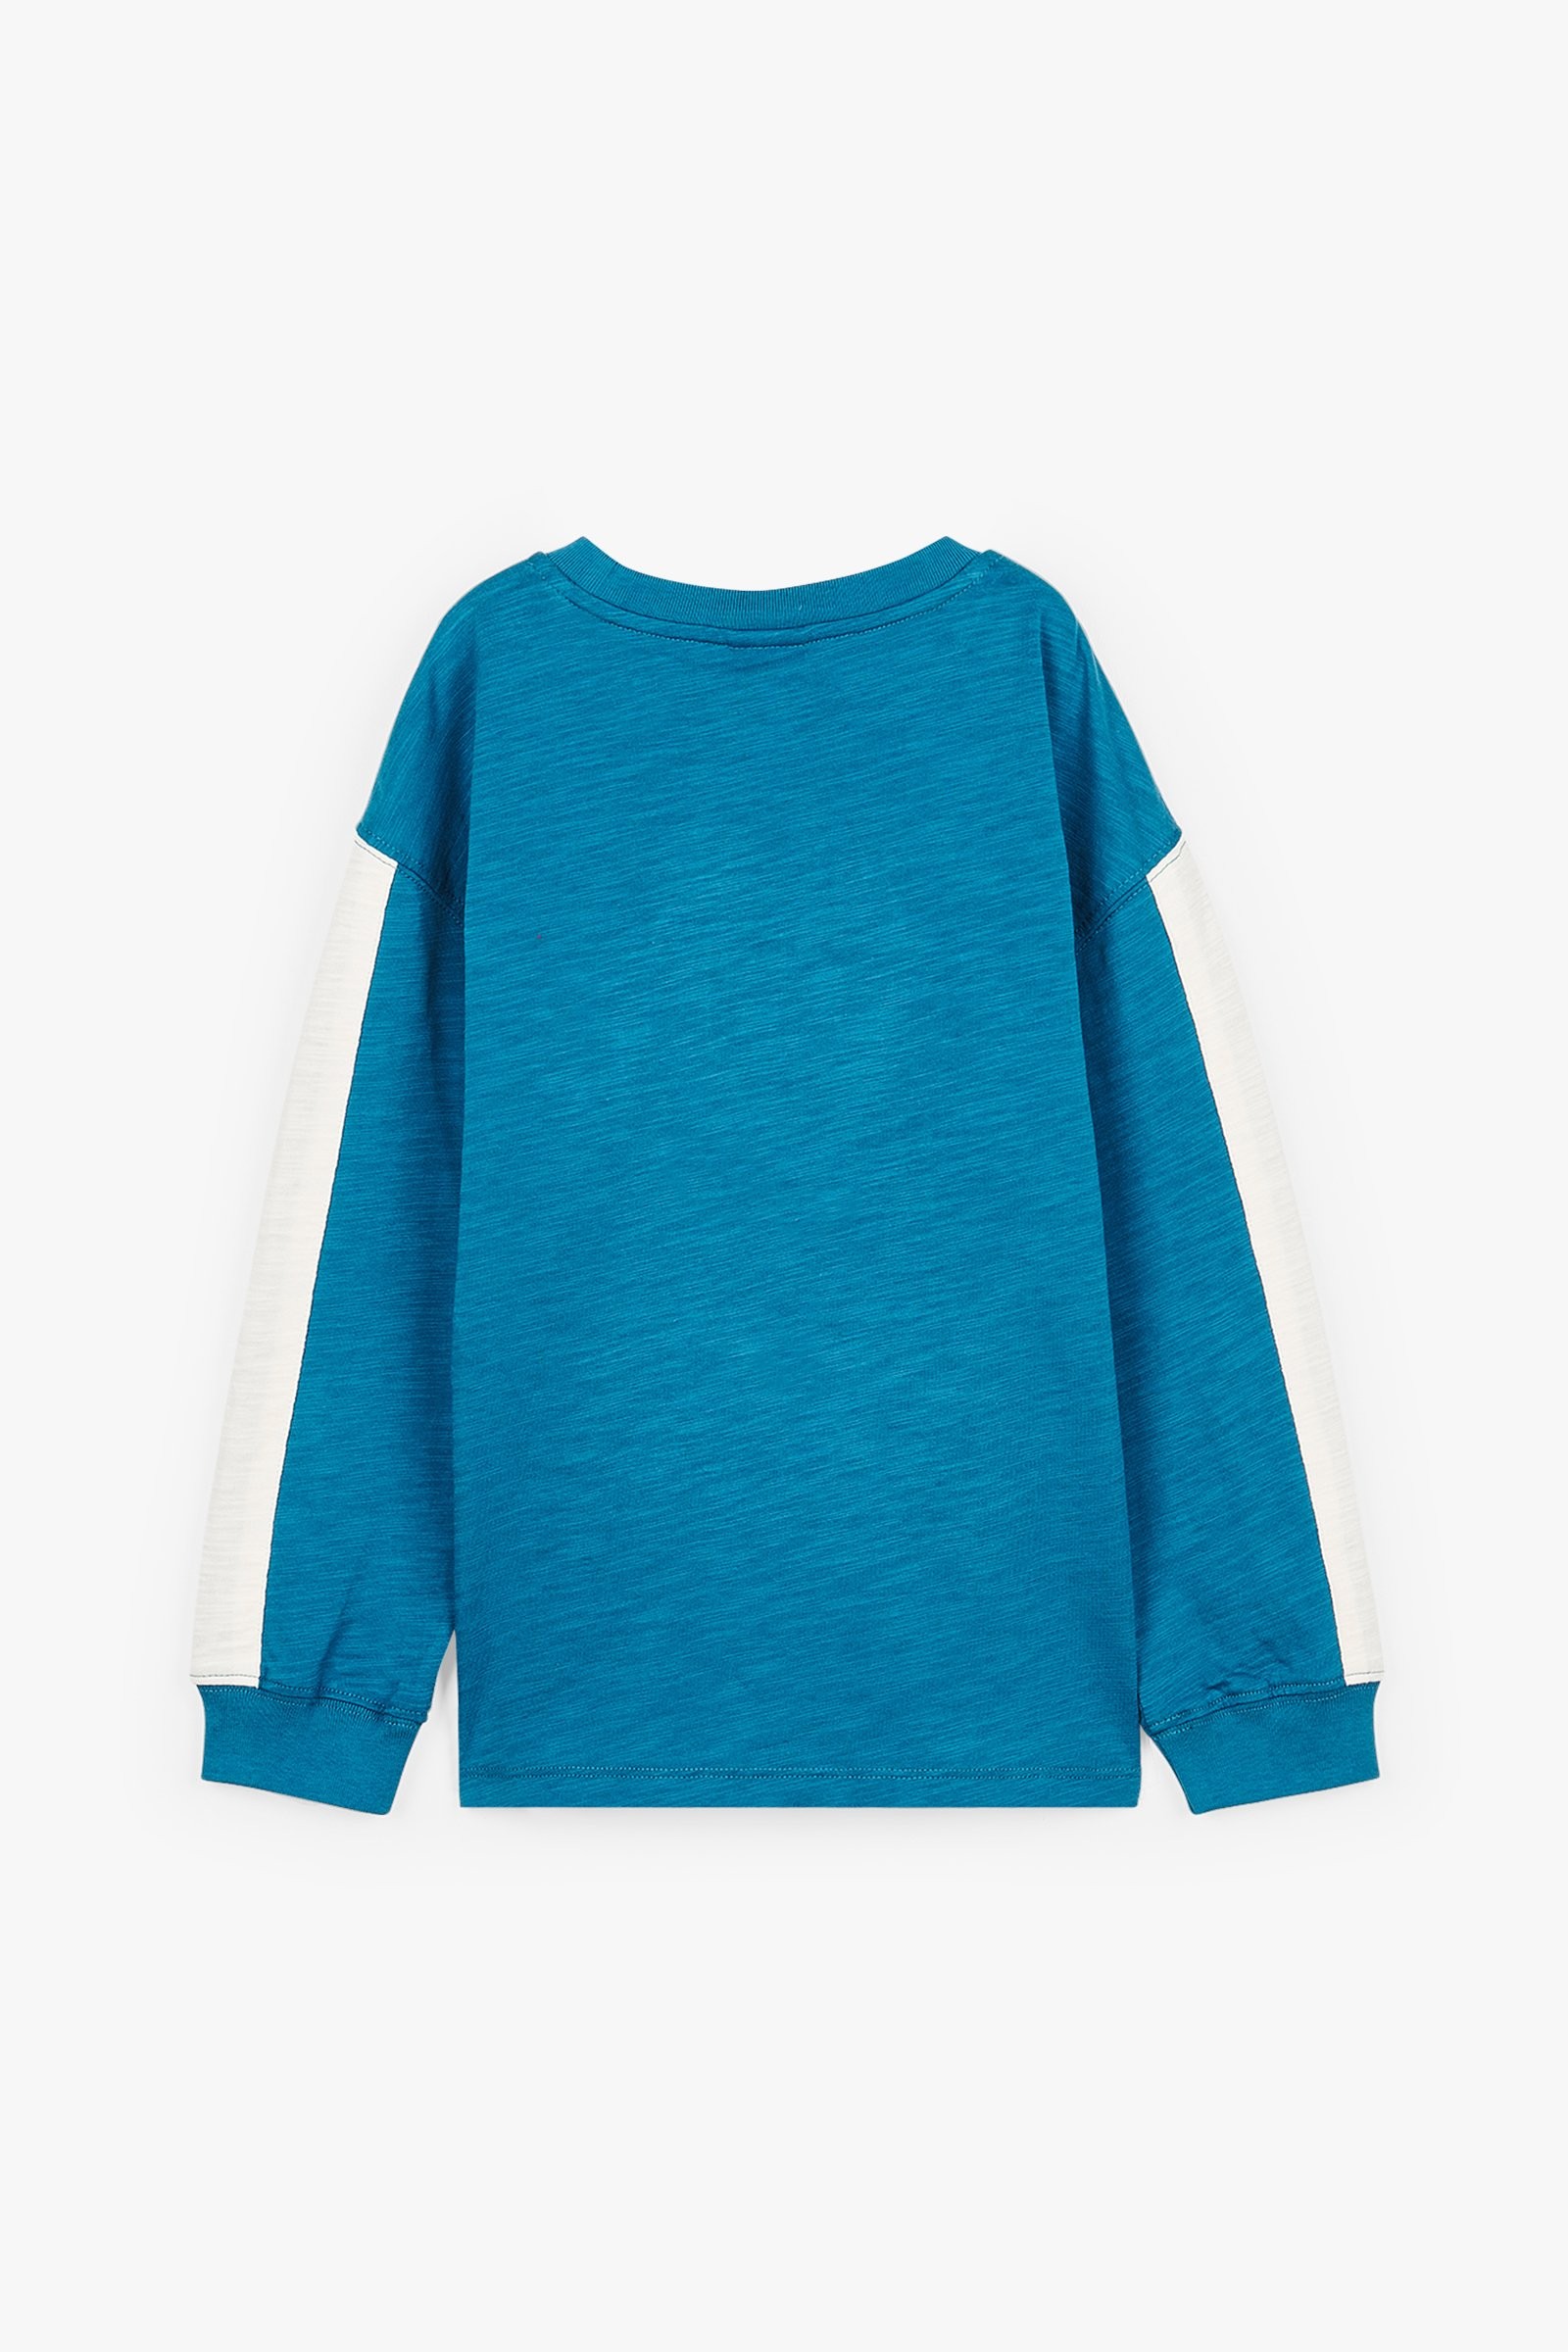 CKS Kids - DRIFTER - T-Shirt Langarm - Blau